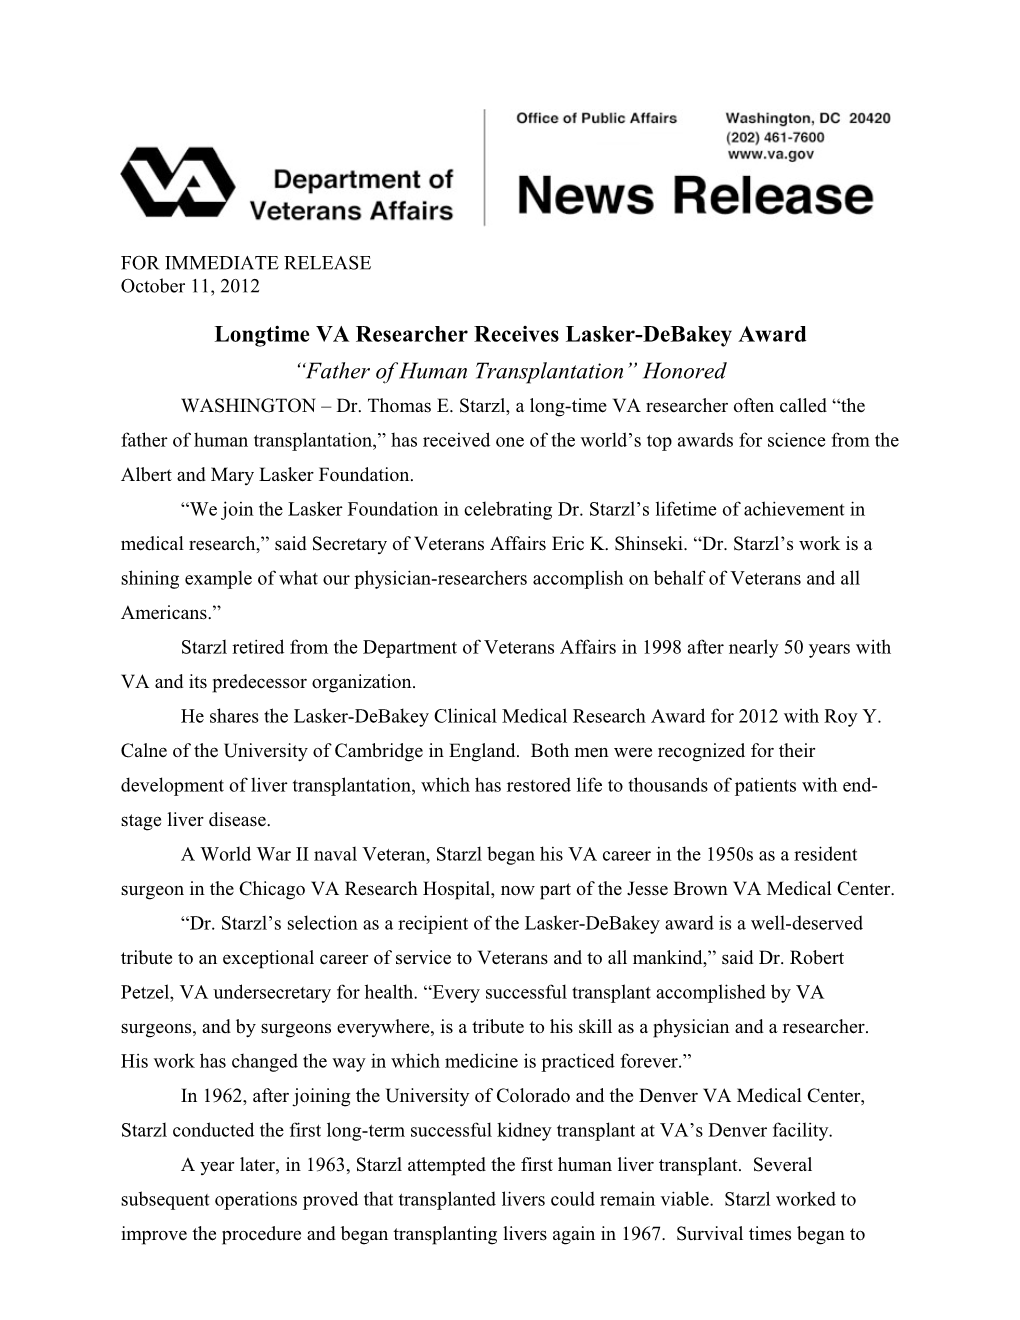 Longtime VA Researcher Receives Lasker-Debakey Award